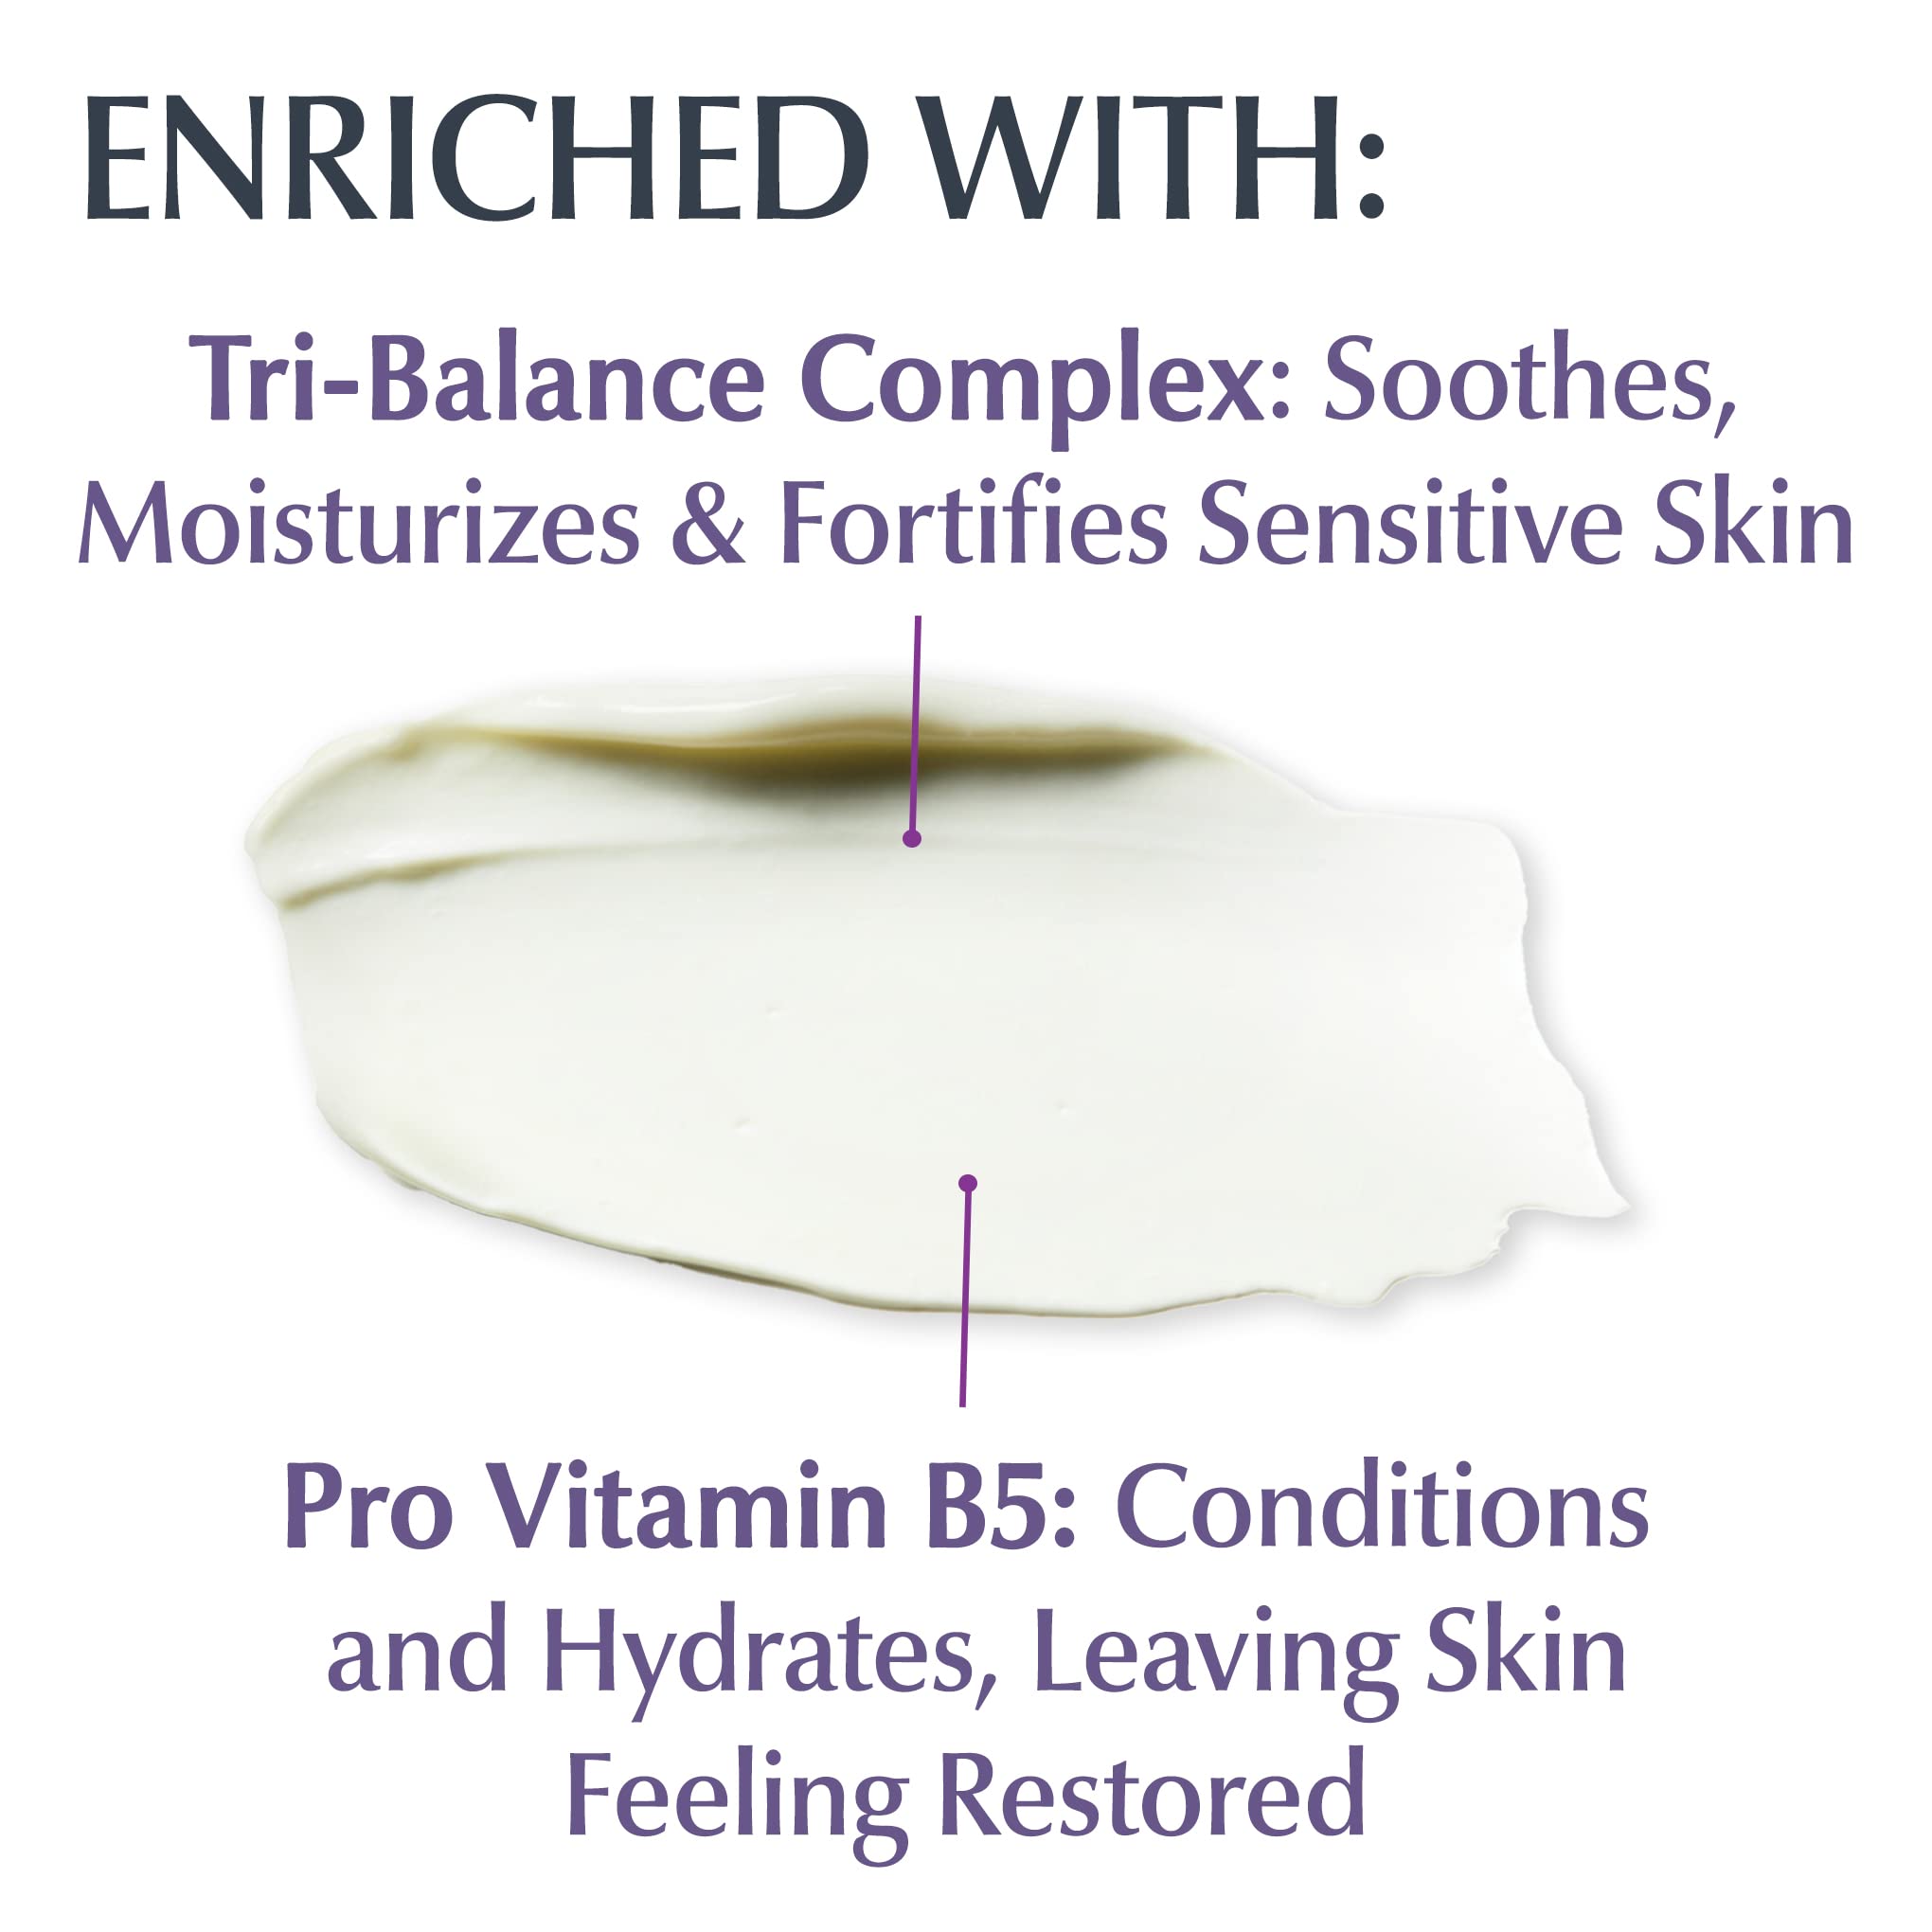 Eucerin Skin Balance Night Cream, Sensitive Skin Face Moisturizer Enriched with Tri-Balance Complex, 1.7 Oz Bottle